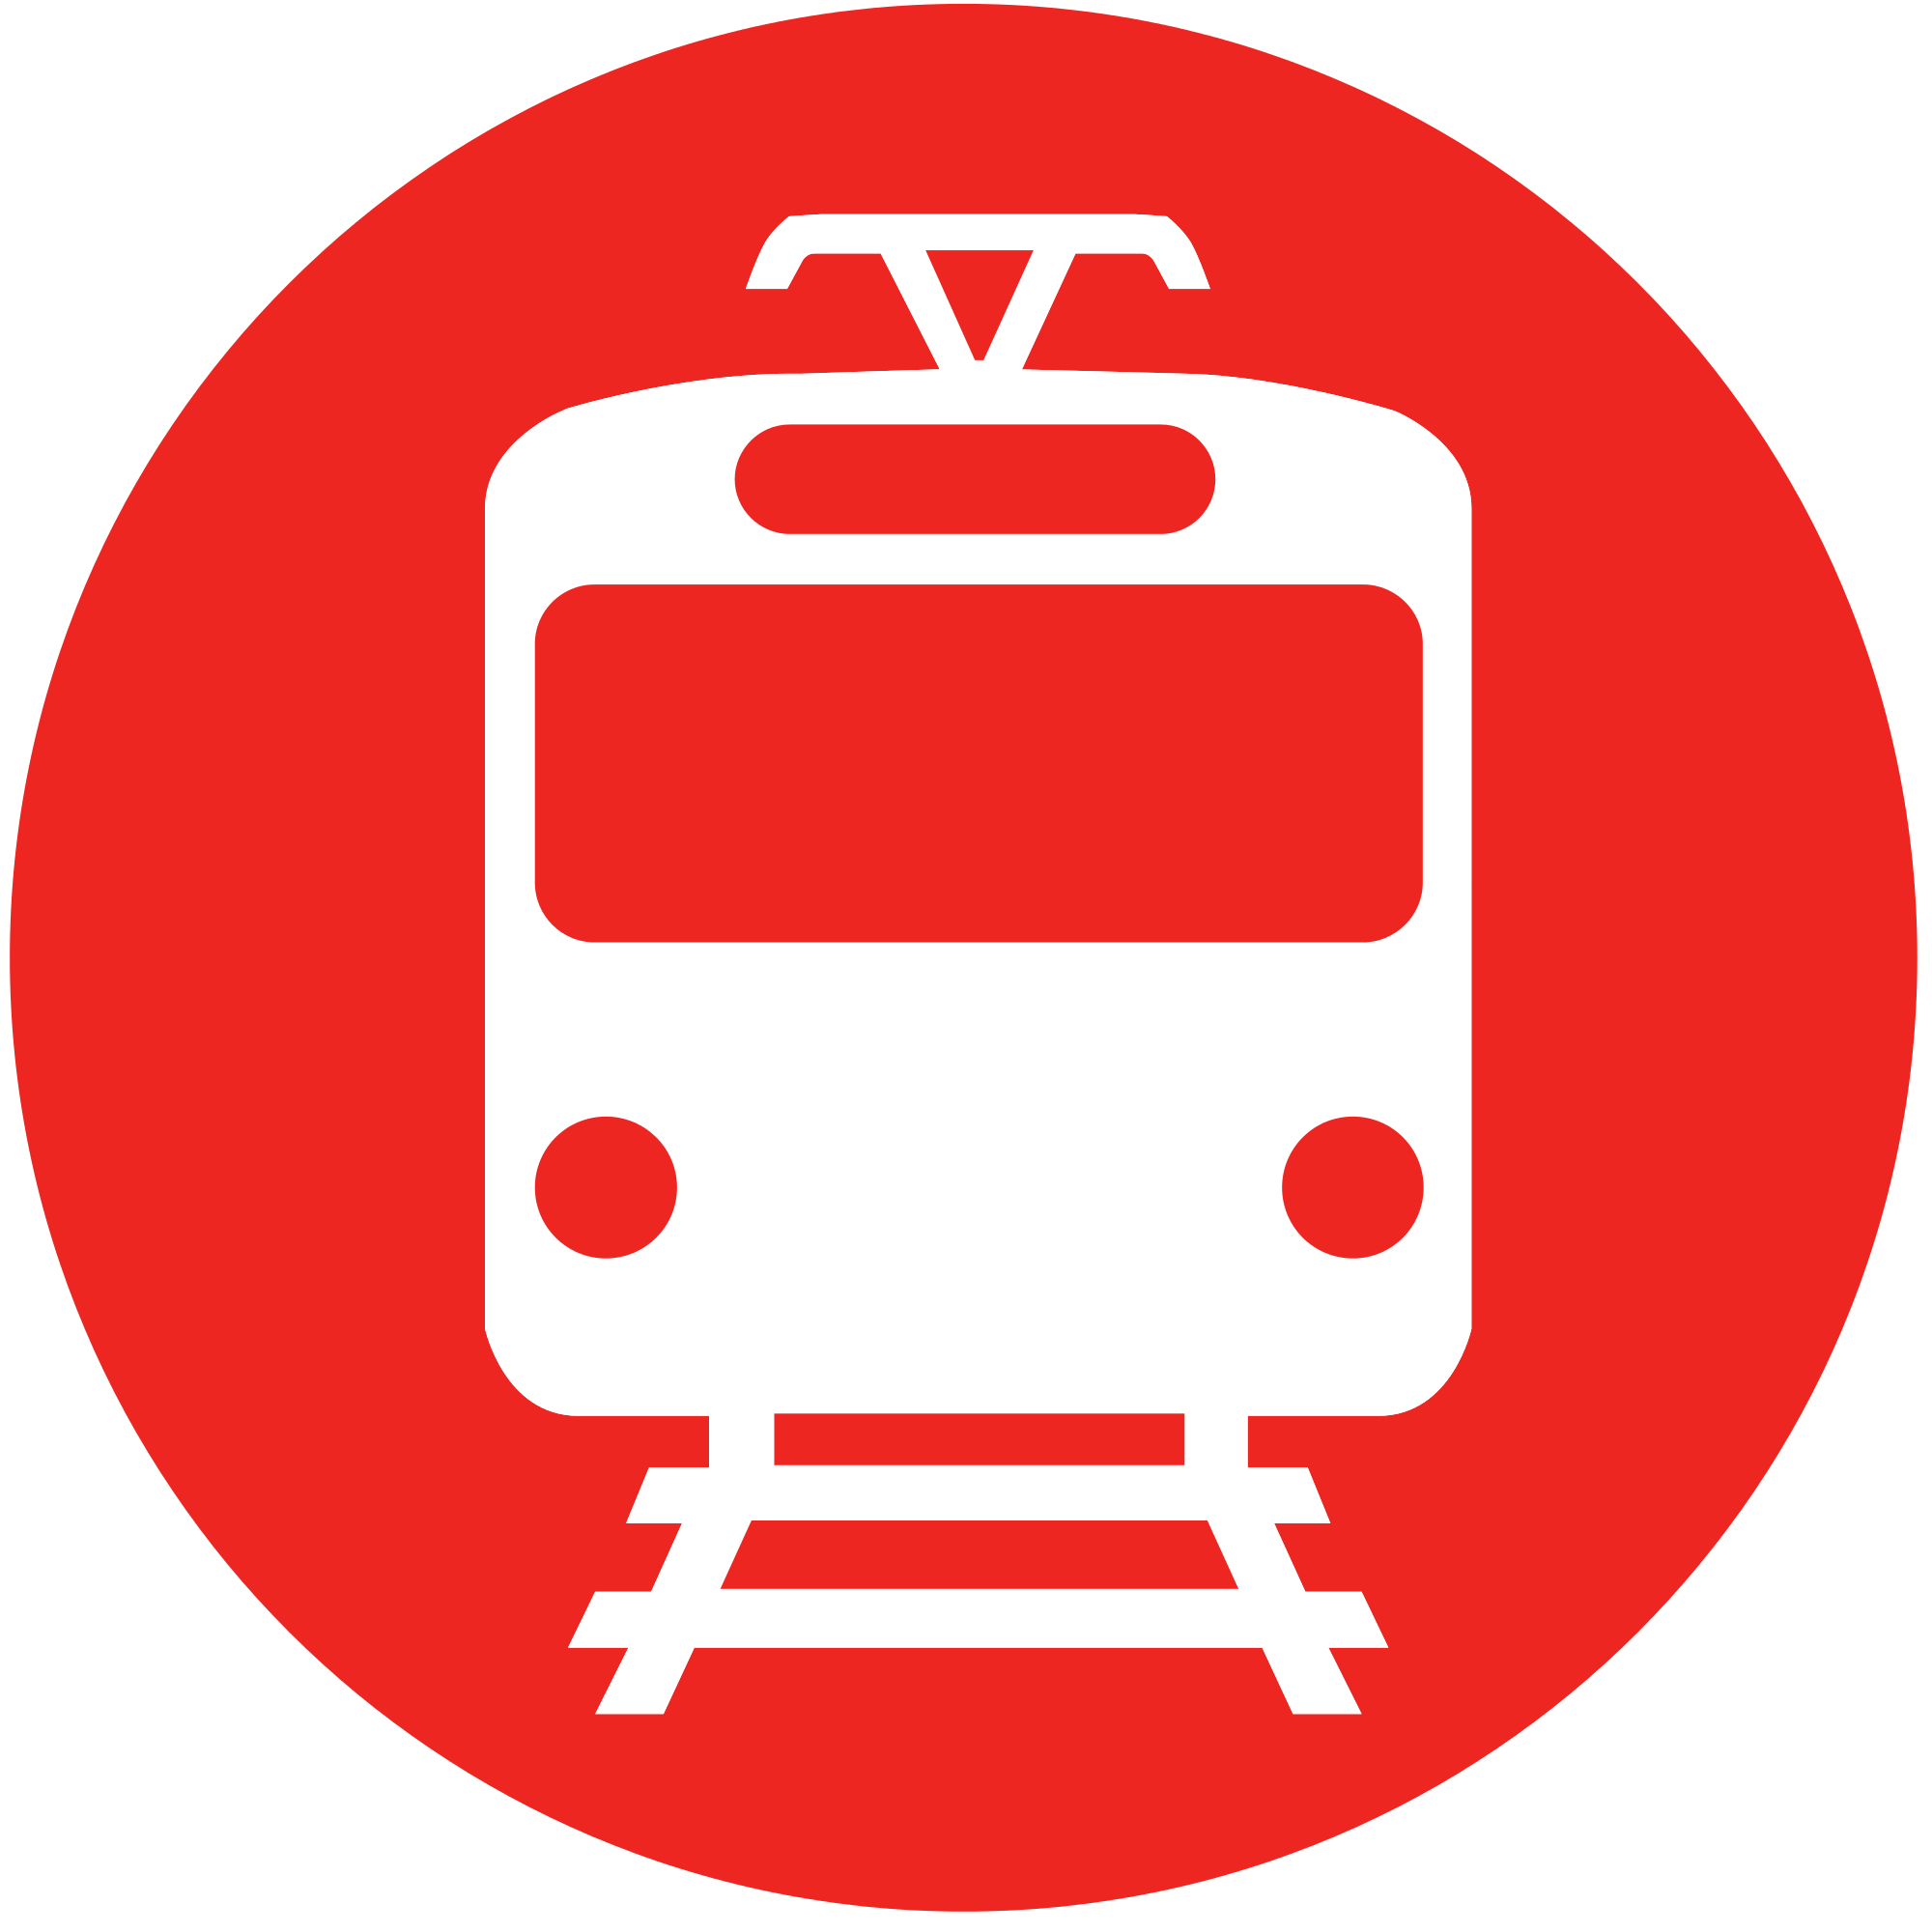 clipart train trolley